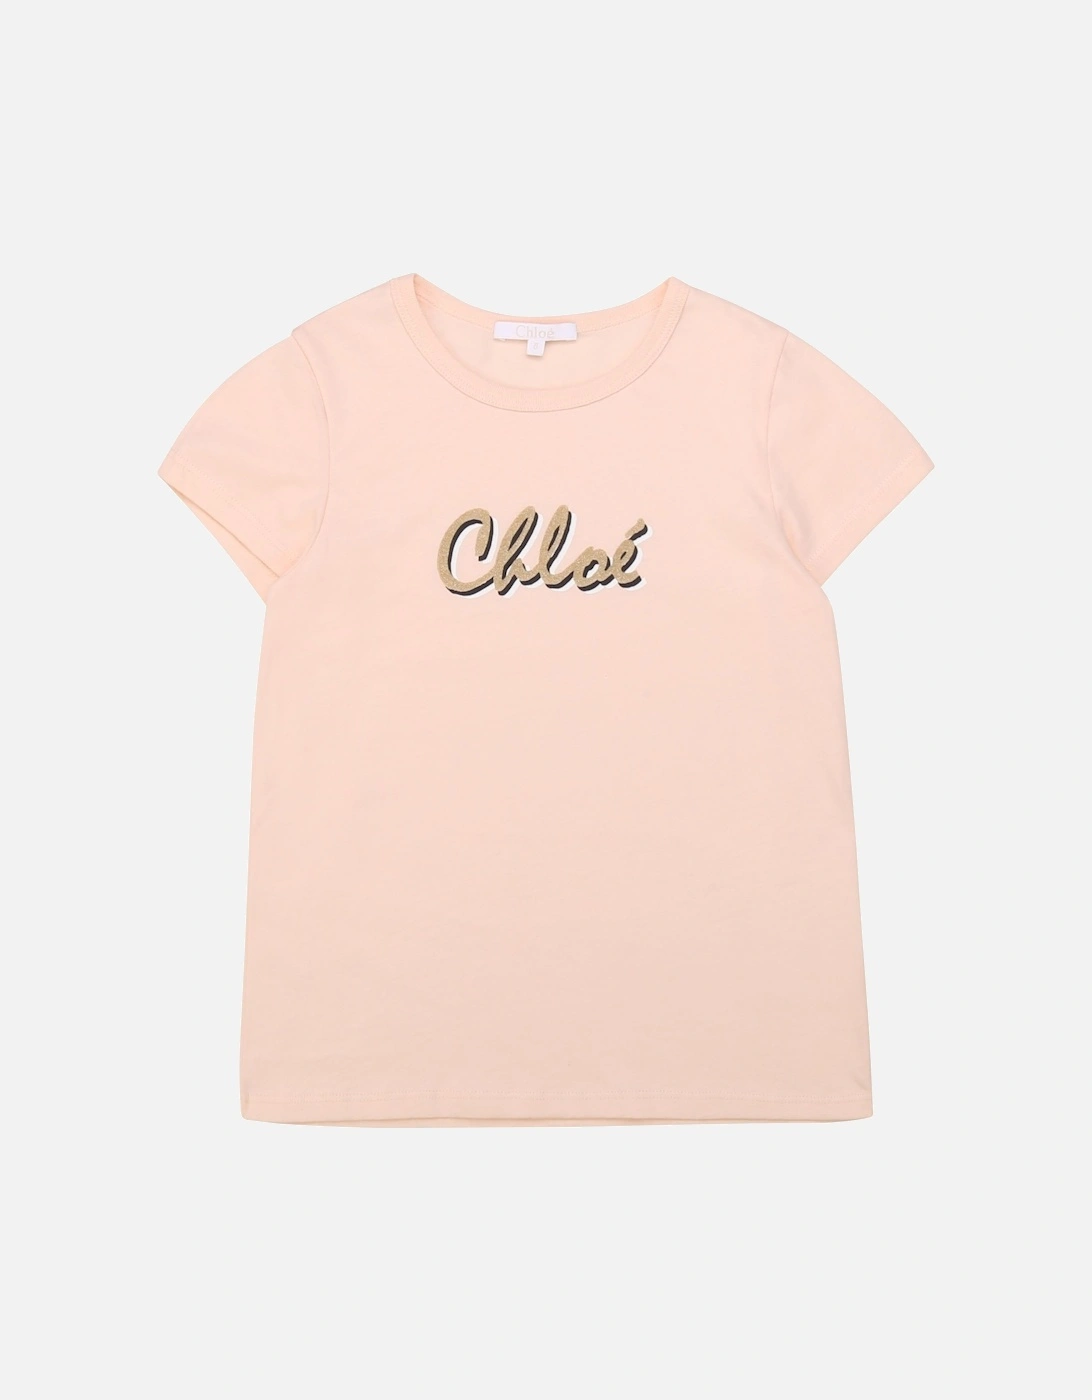 Chloe Girls Cotton T-Shirt Pink, 2 of 1